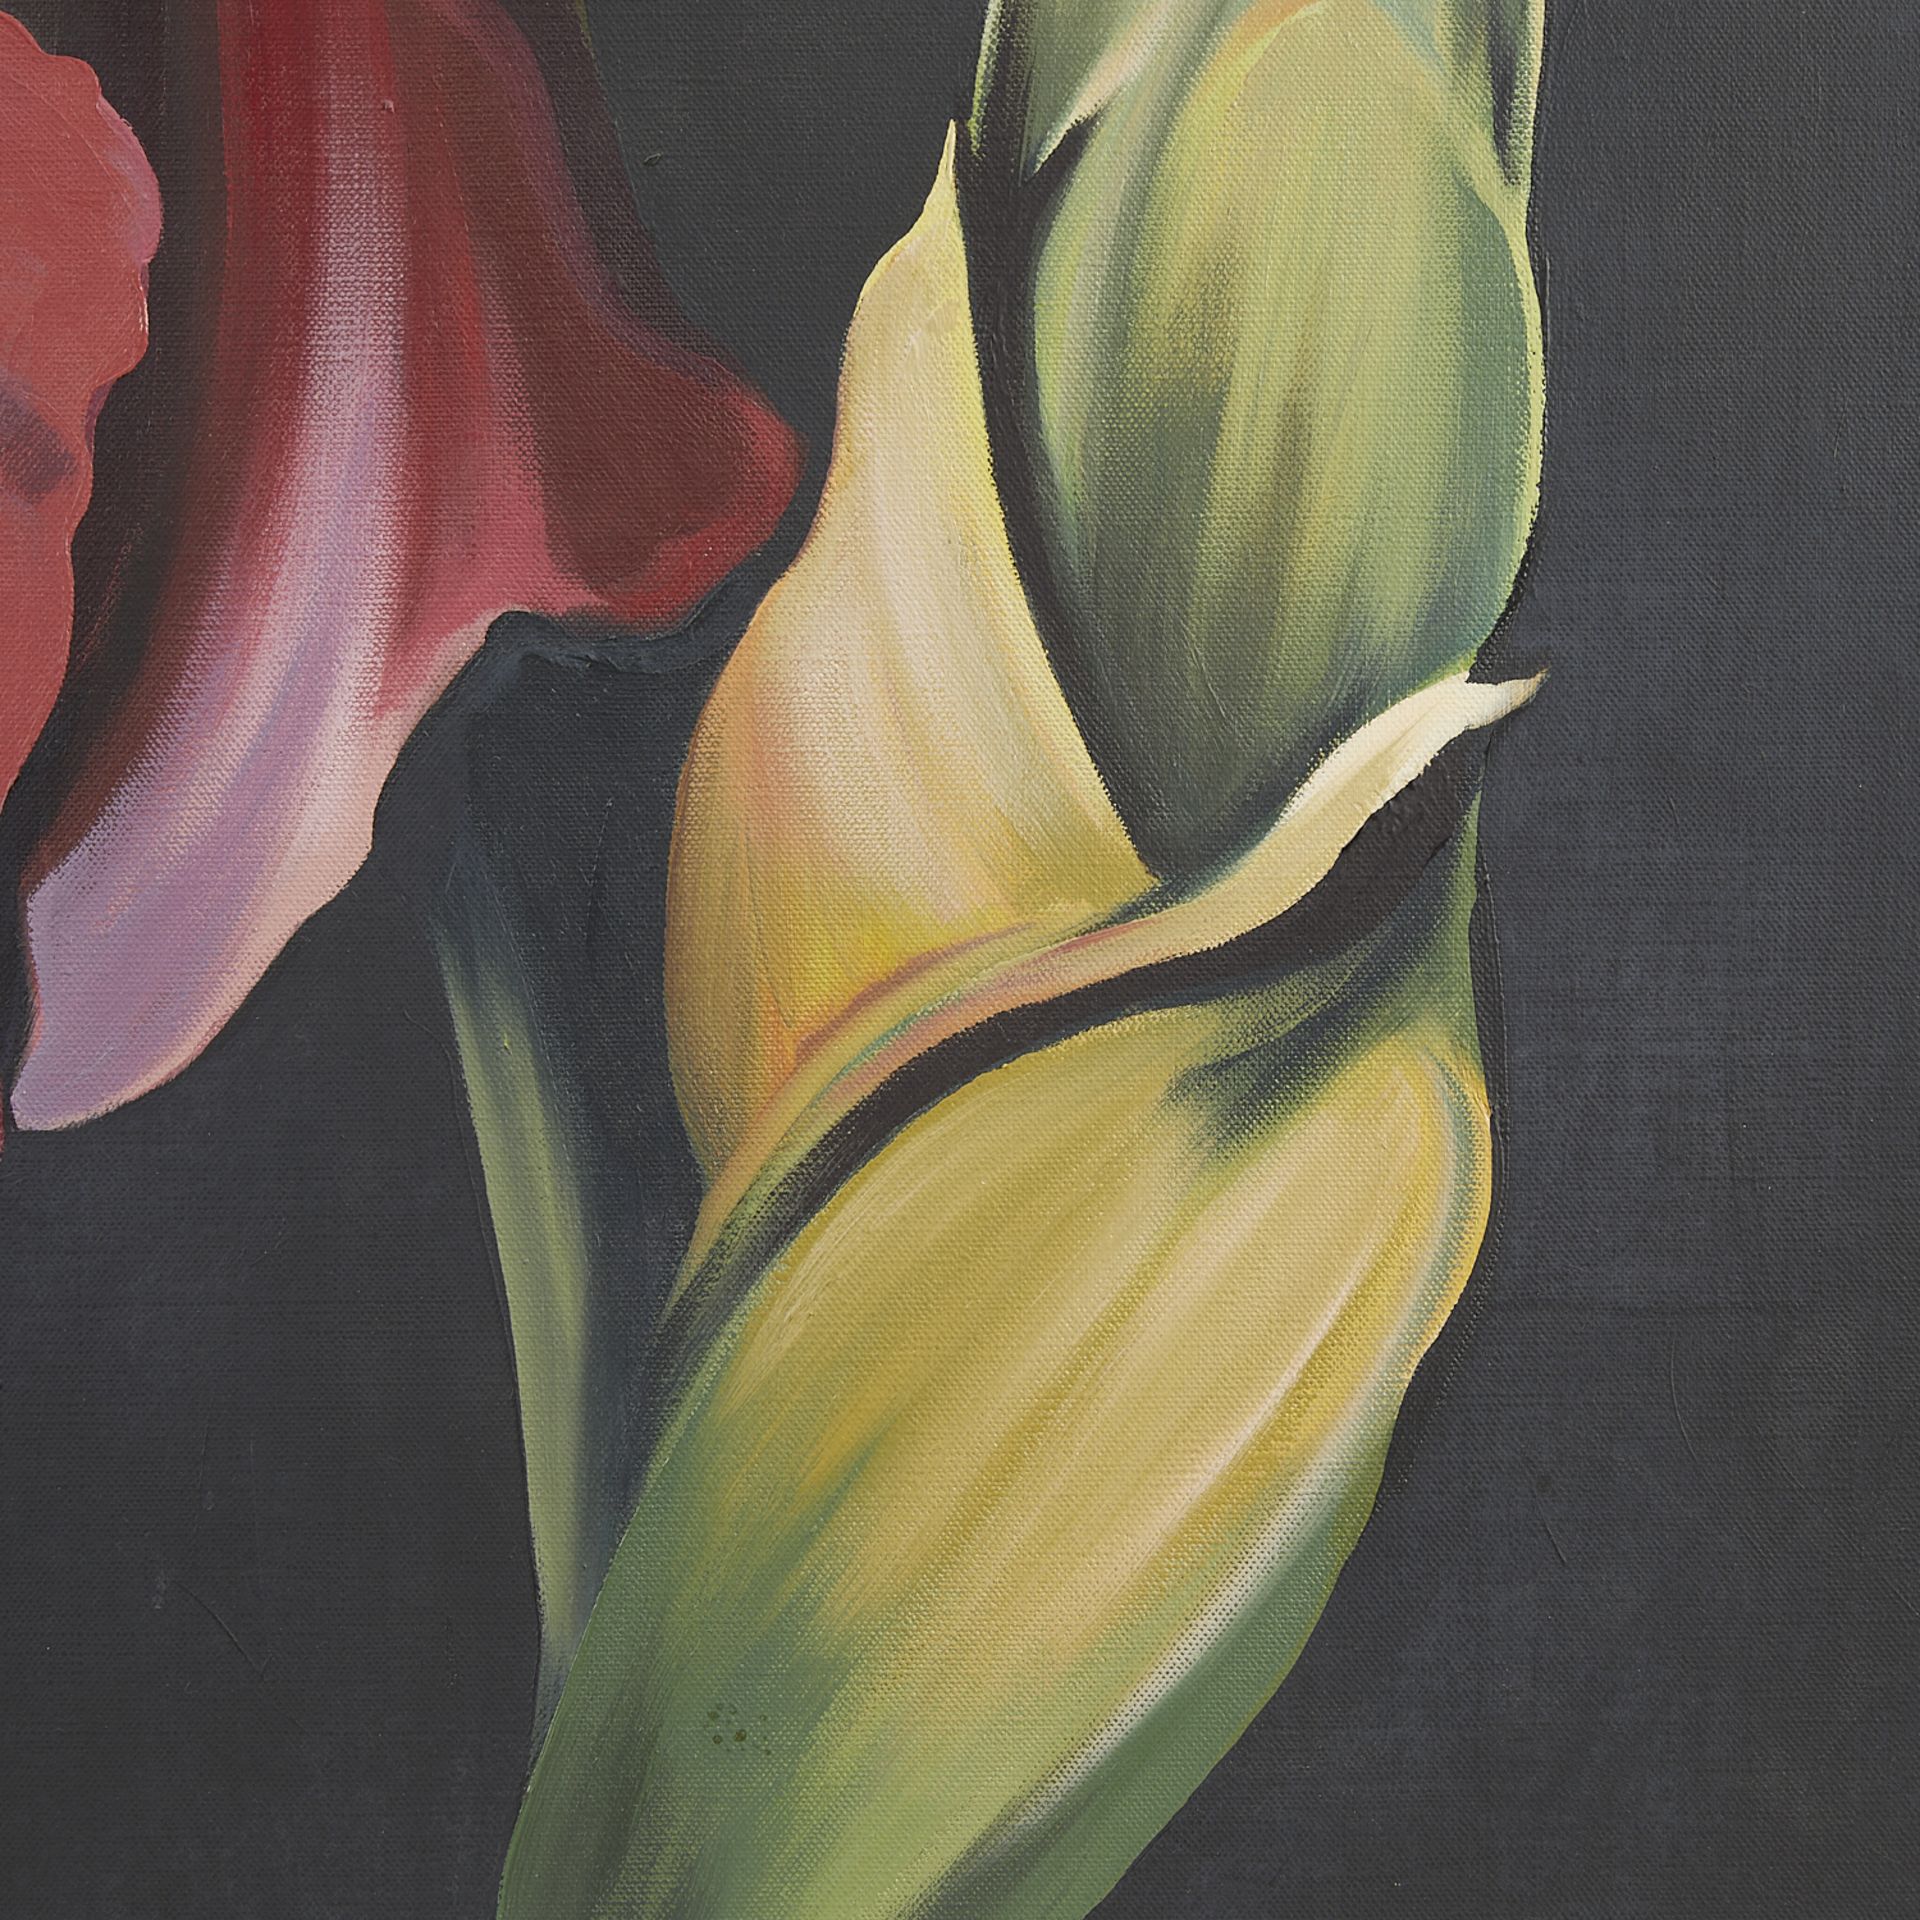 Lowell Nesbitt "Two Irises on Black" Oil on Canvas - Image 5 of 9